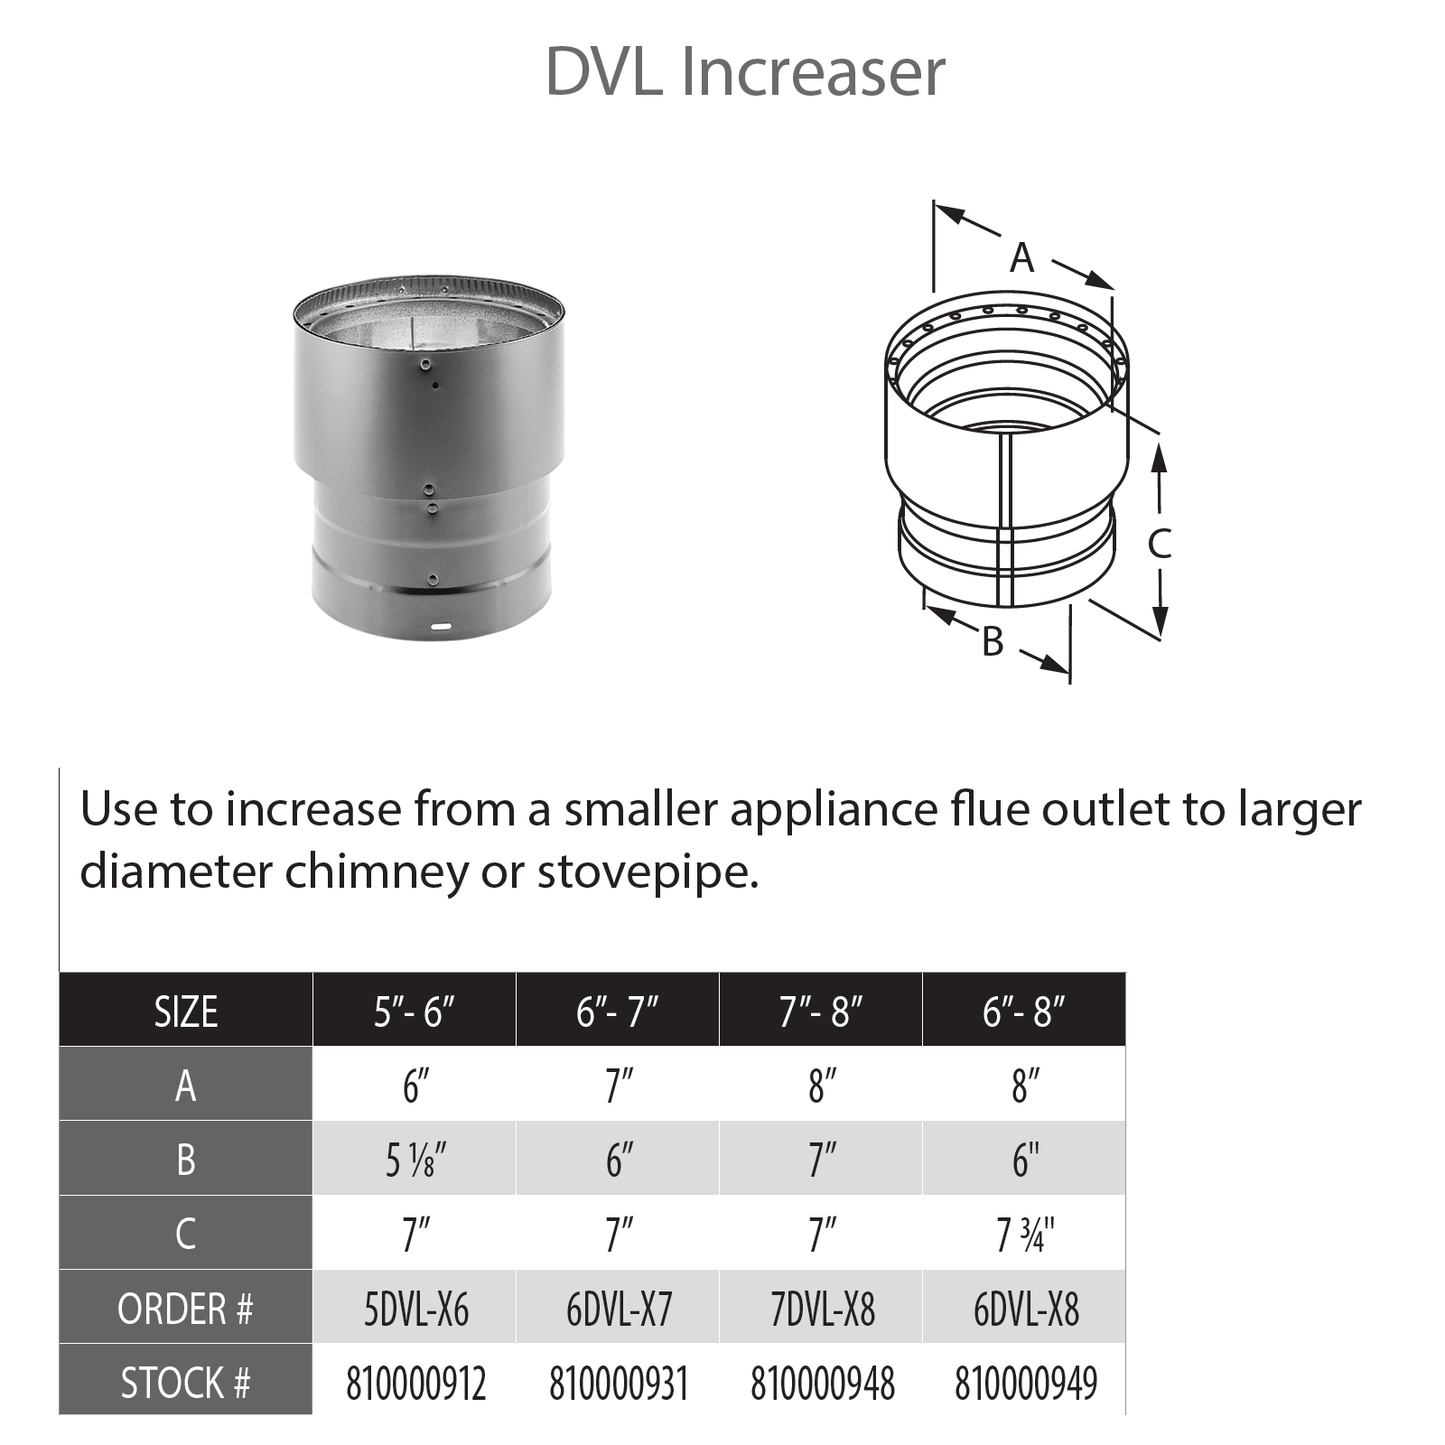 DuraVent DVL 6" Diameter Increaser 6" - 8" | 6DVL-X8